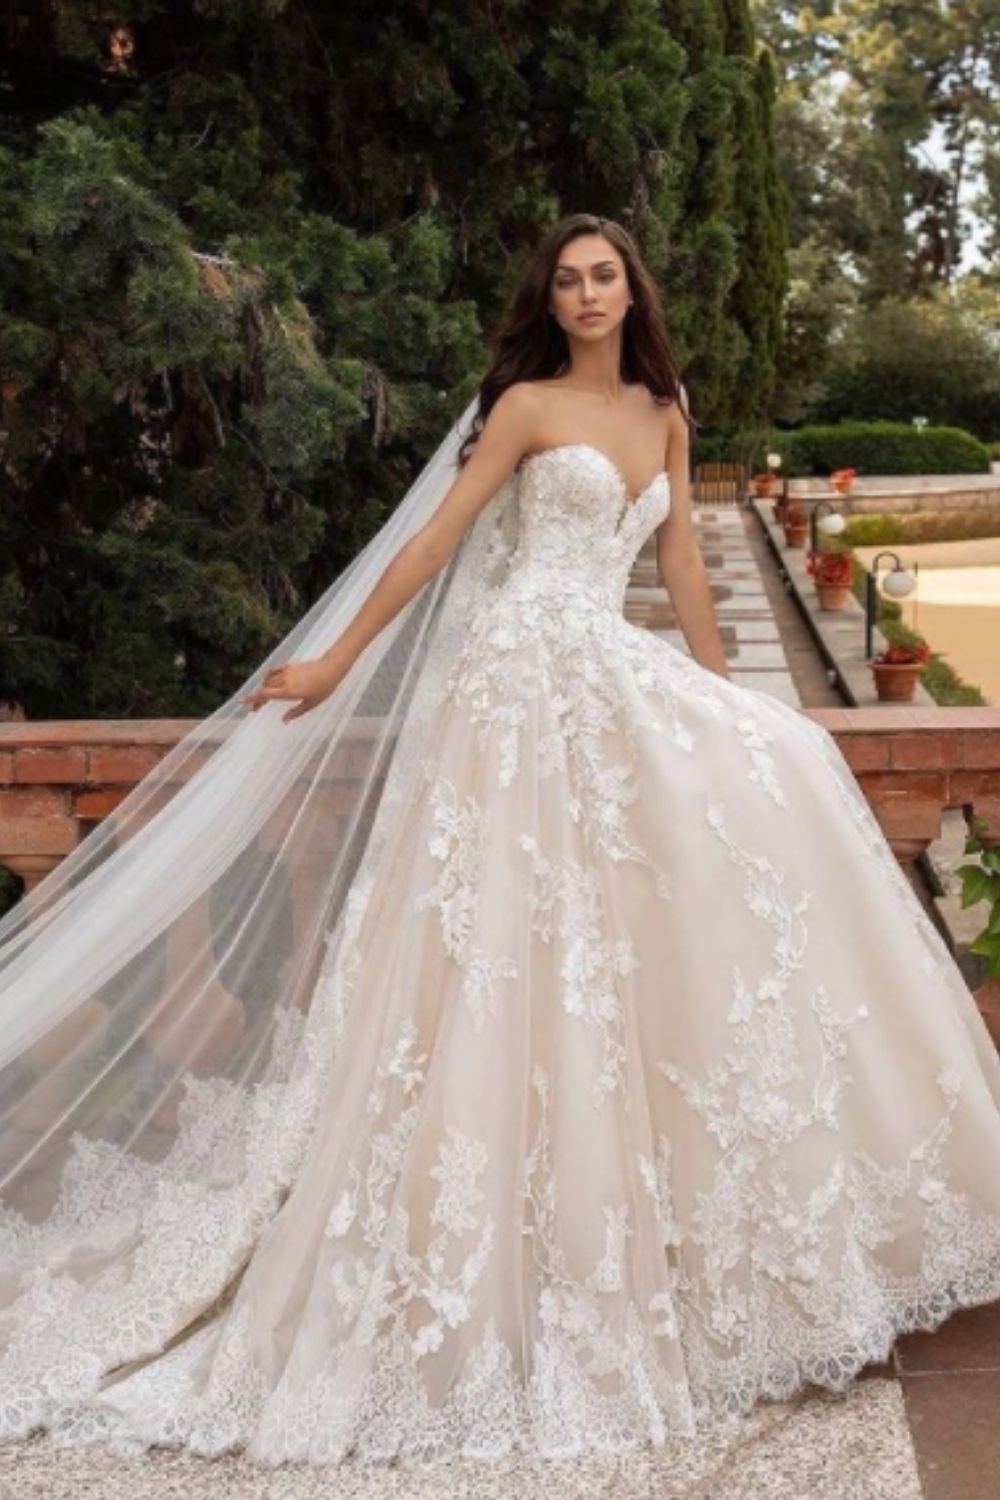 Layered greek vintage wedding dress ideas